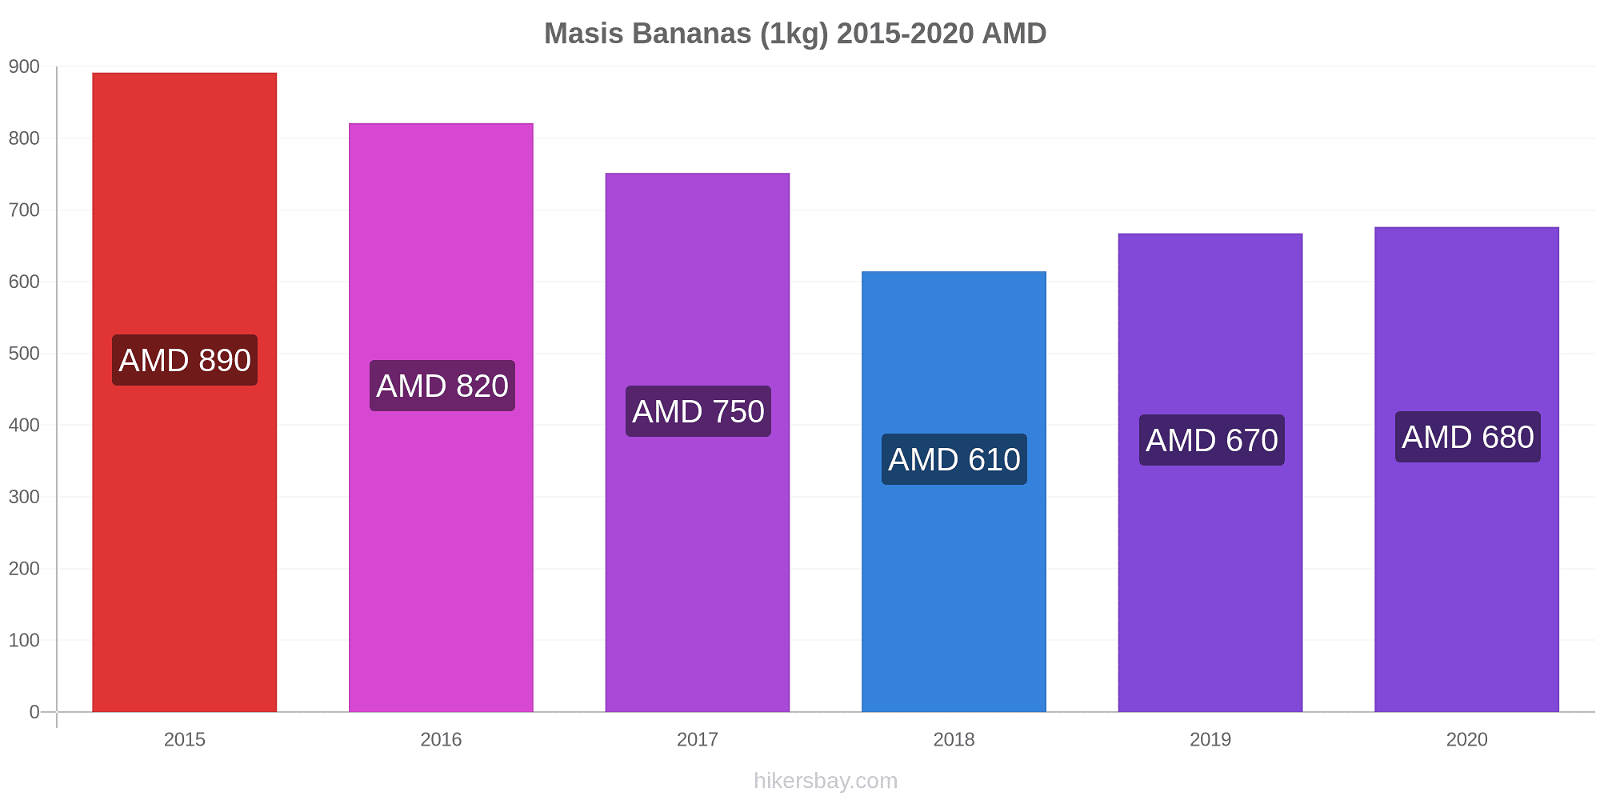 Masis price changes Bananas (1kg) hikersbay.com